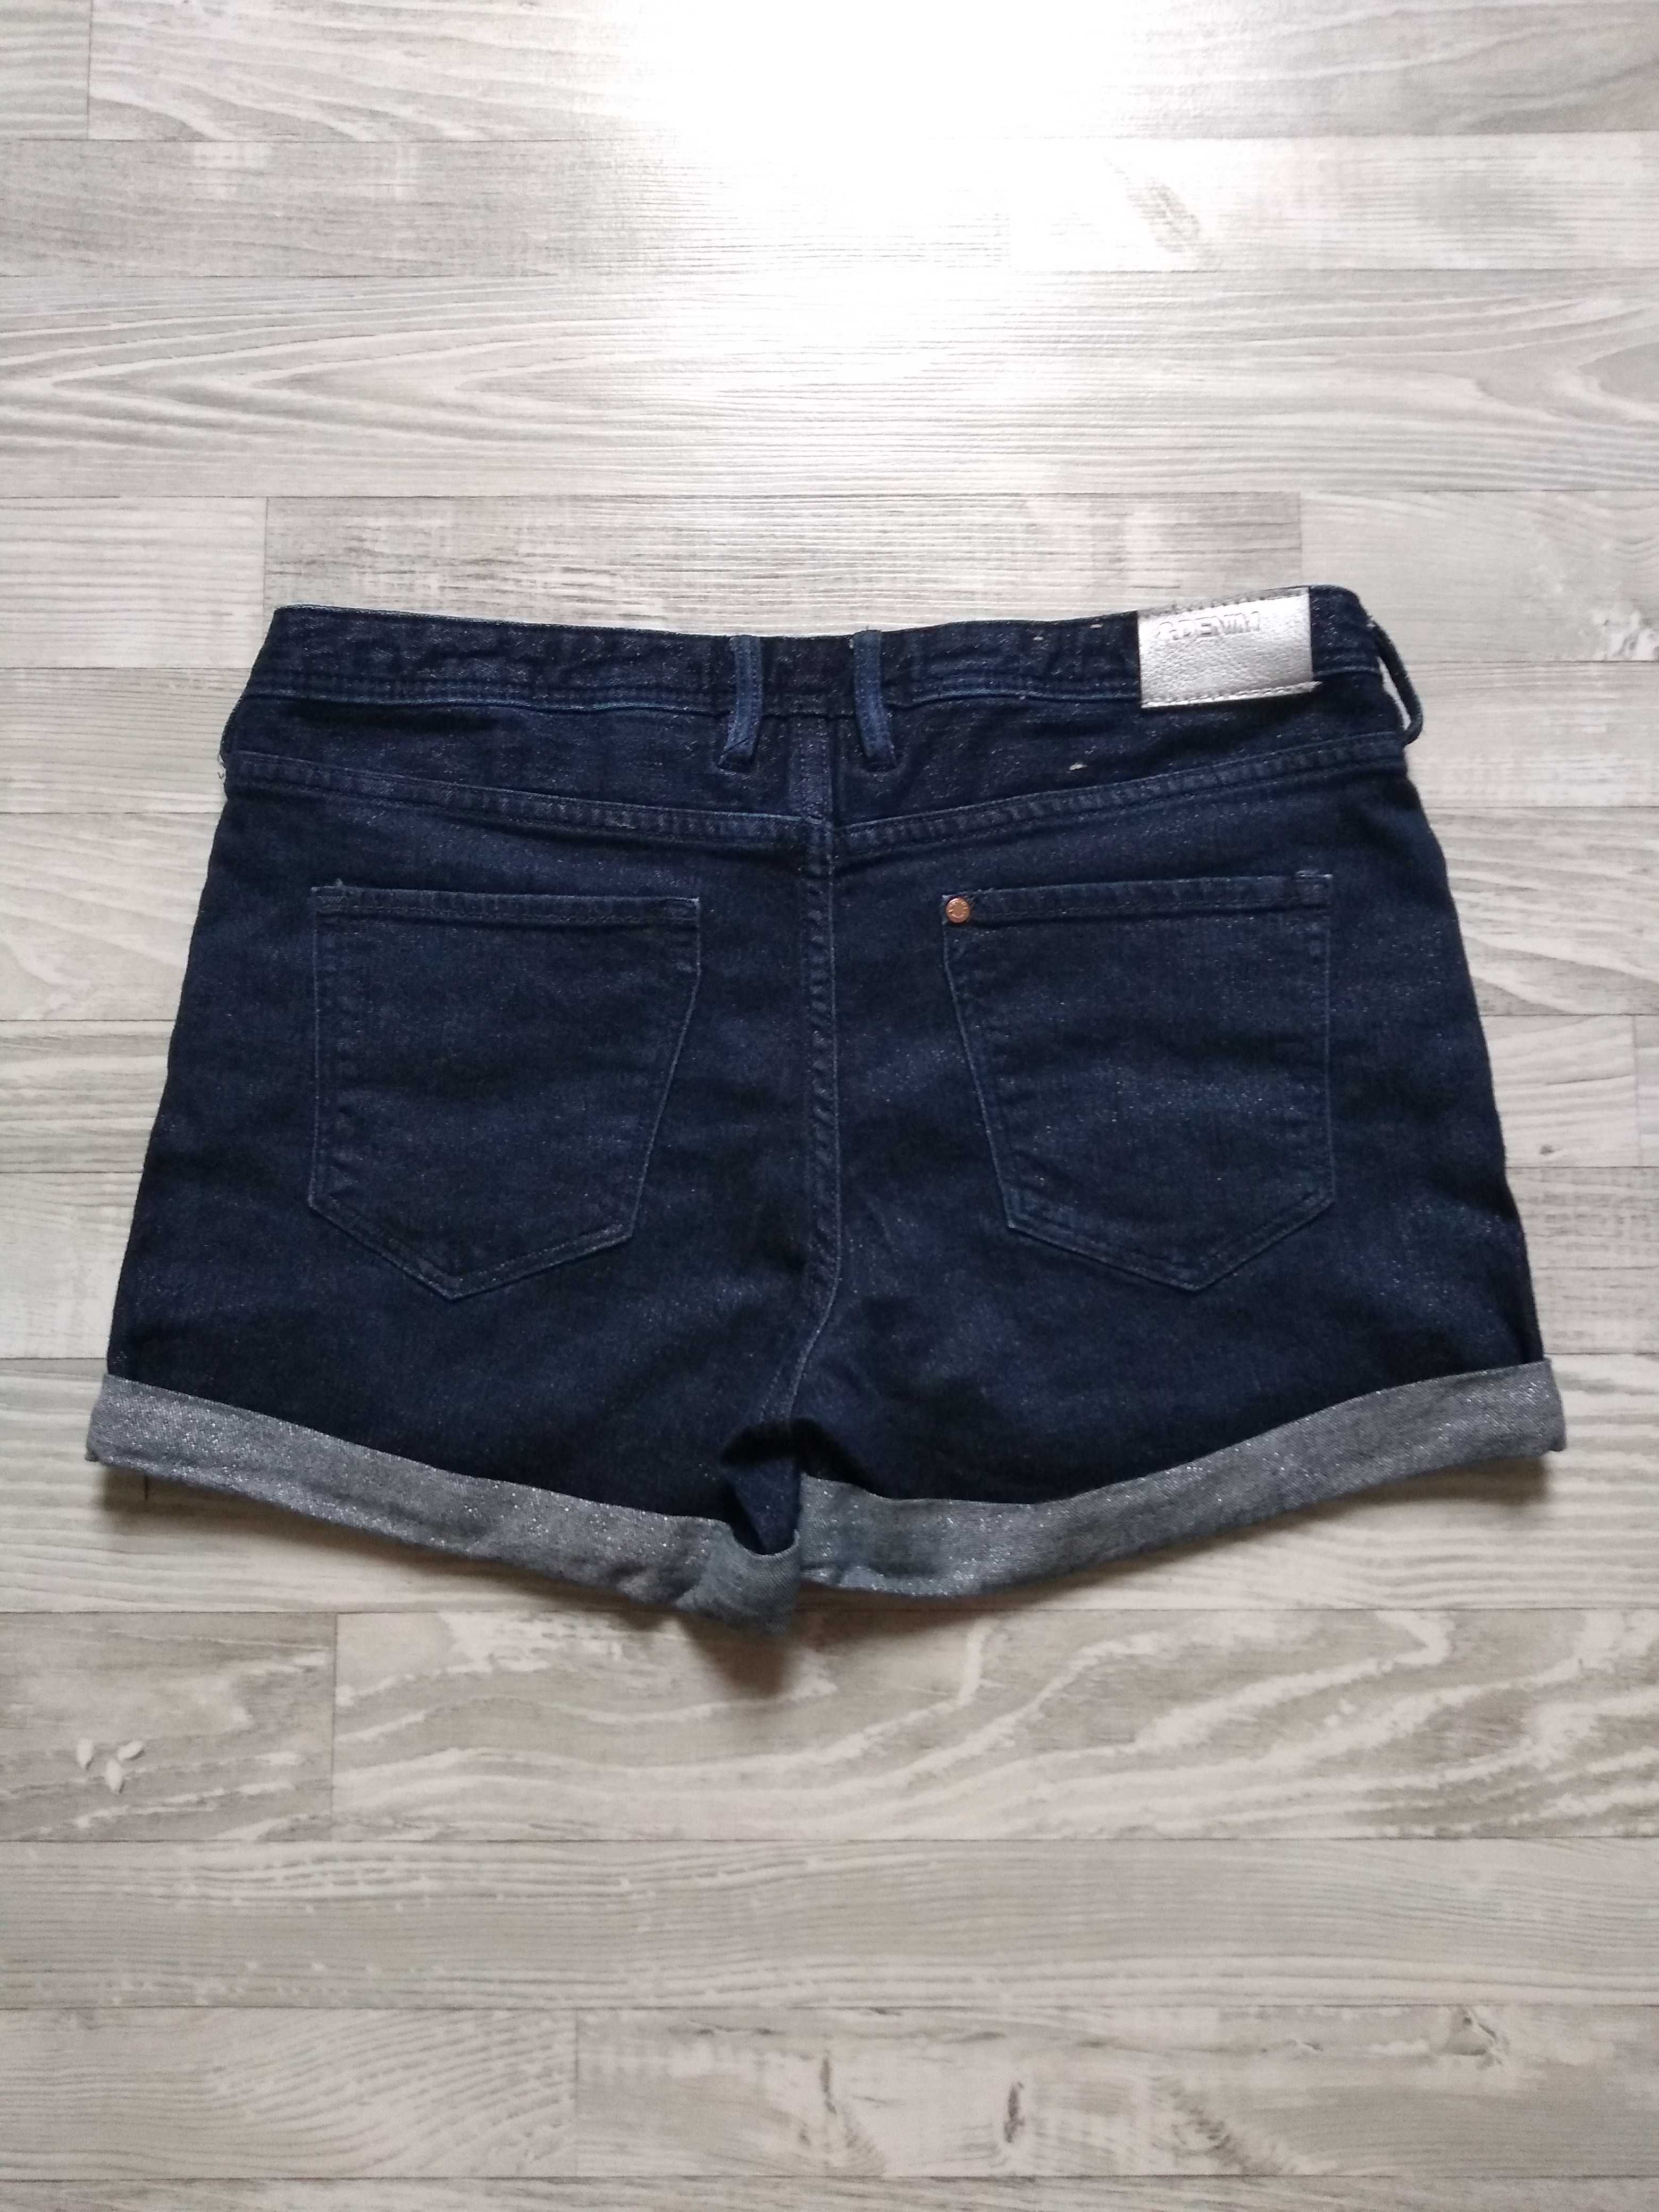 Spodenki miękki jeans XS/158 DENIM 12-13 lat (741)